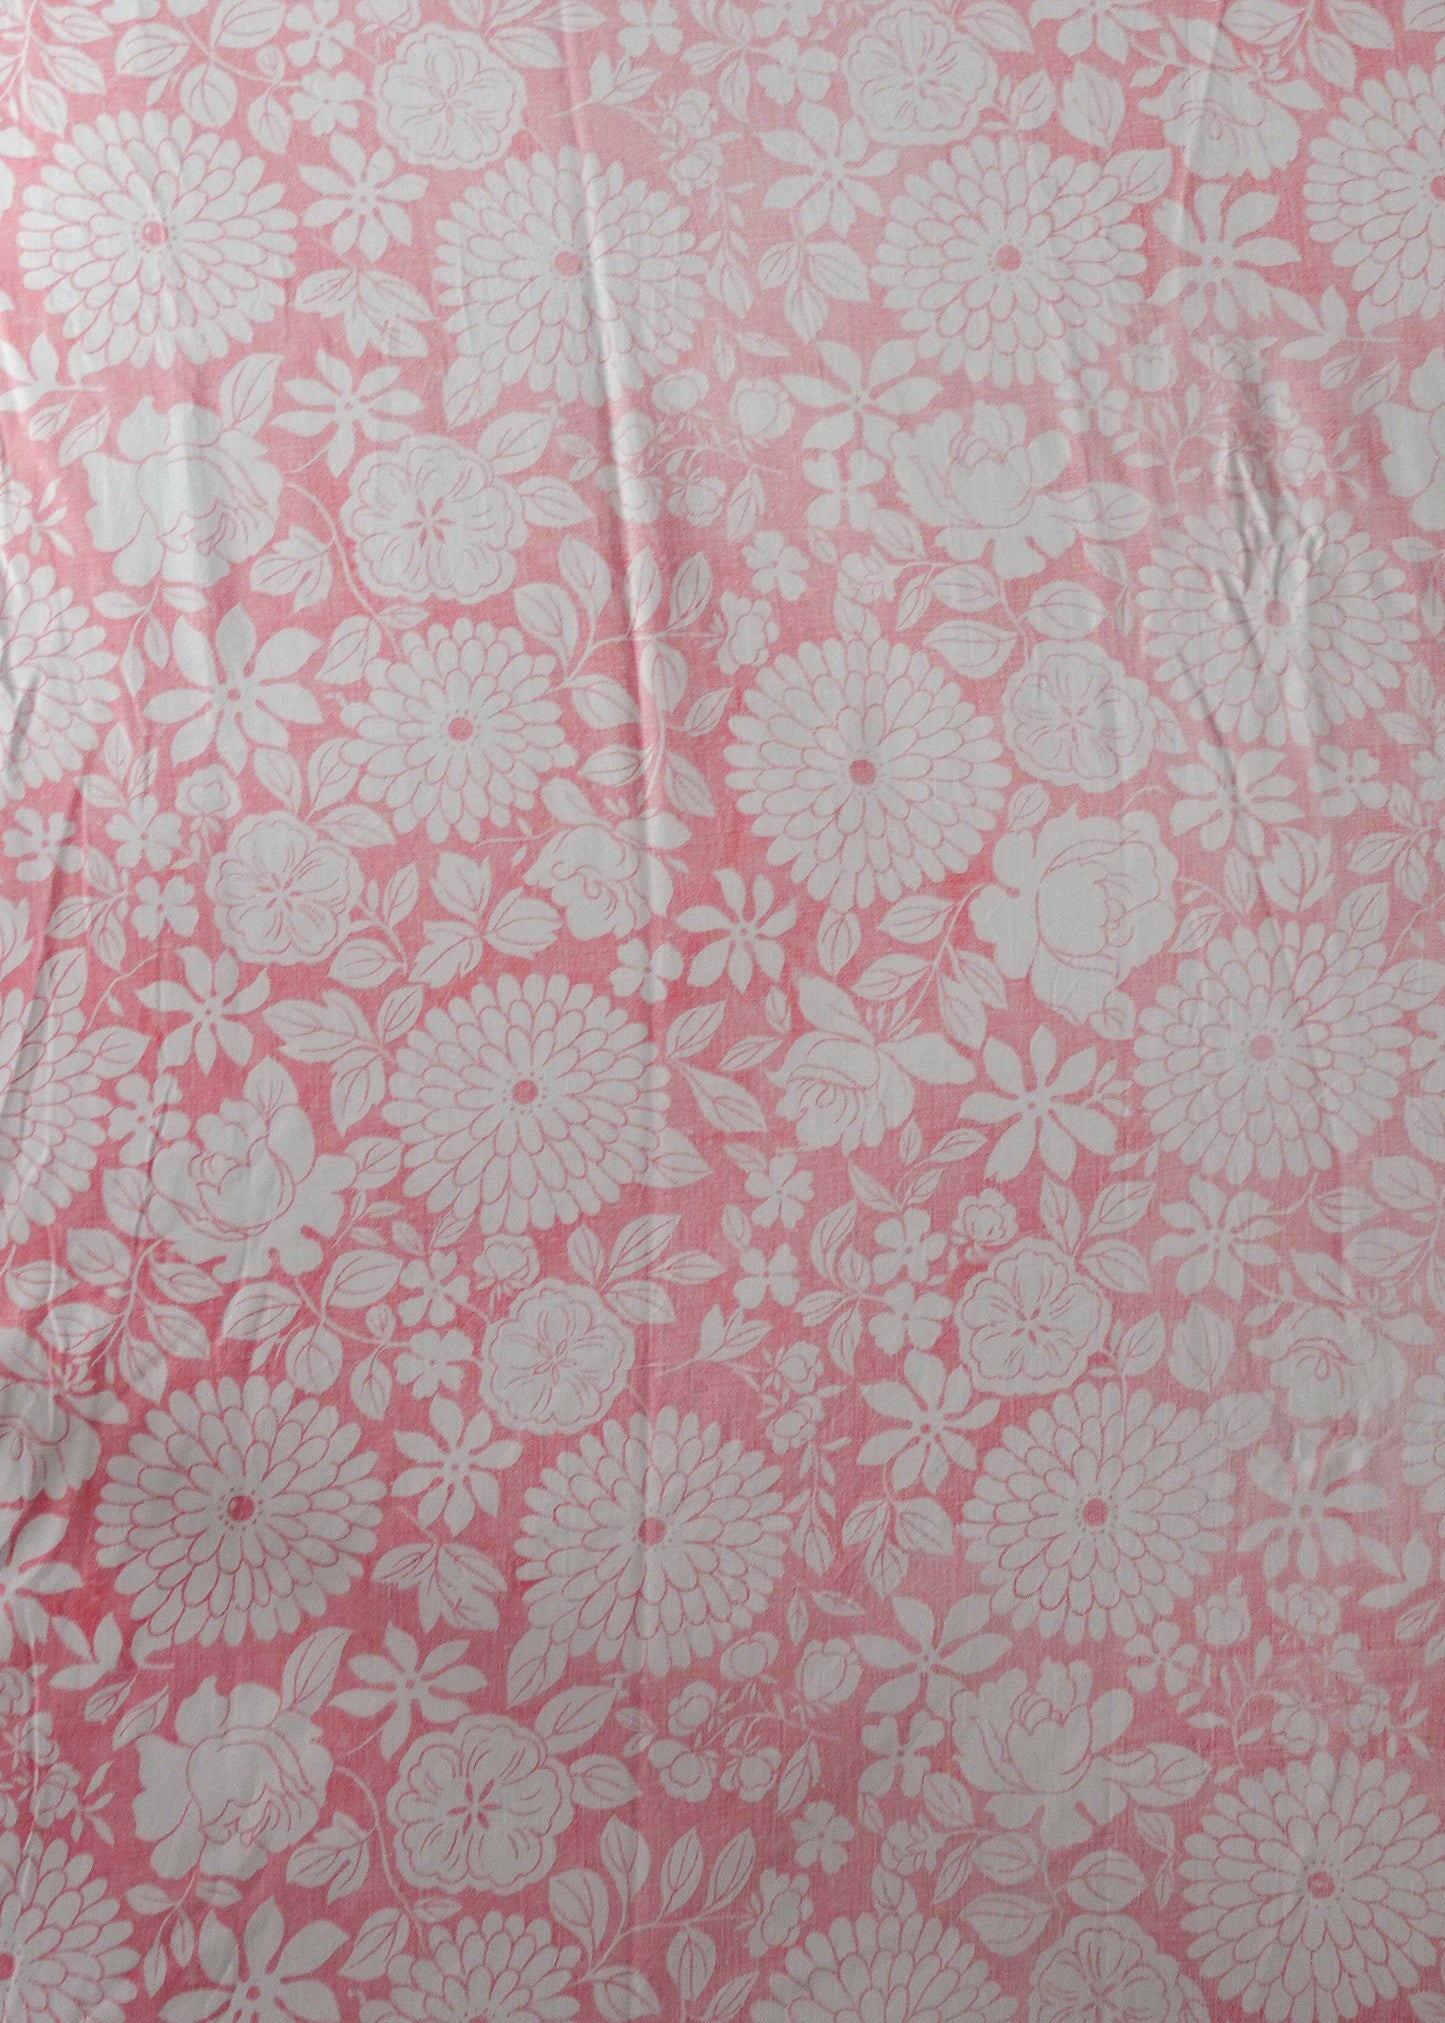 Dark Gray Fabric - Pink Blossoms